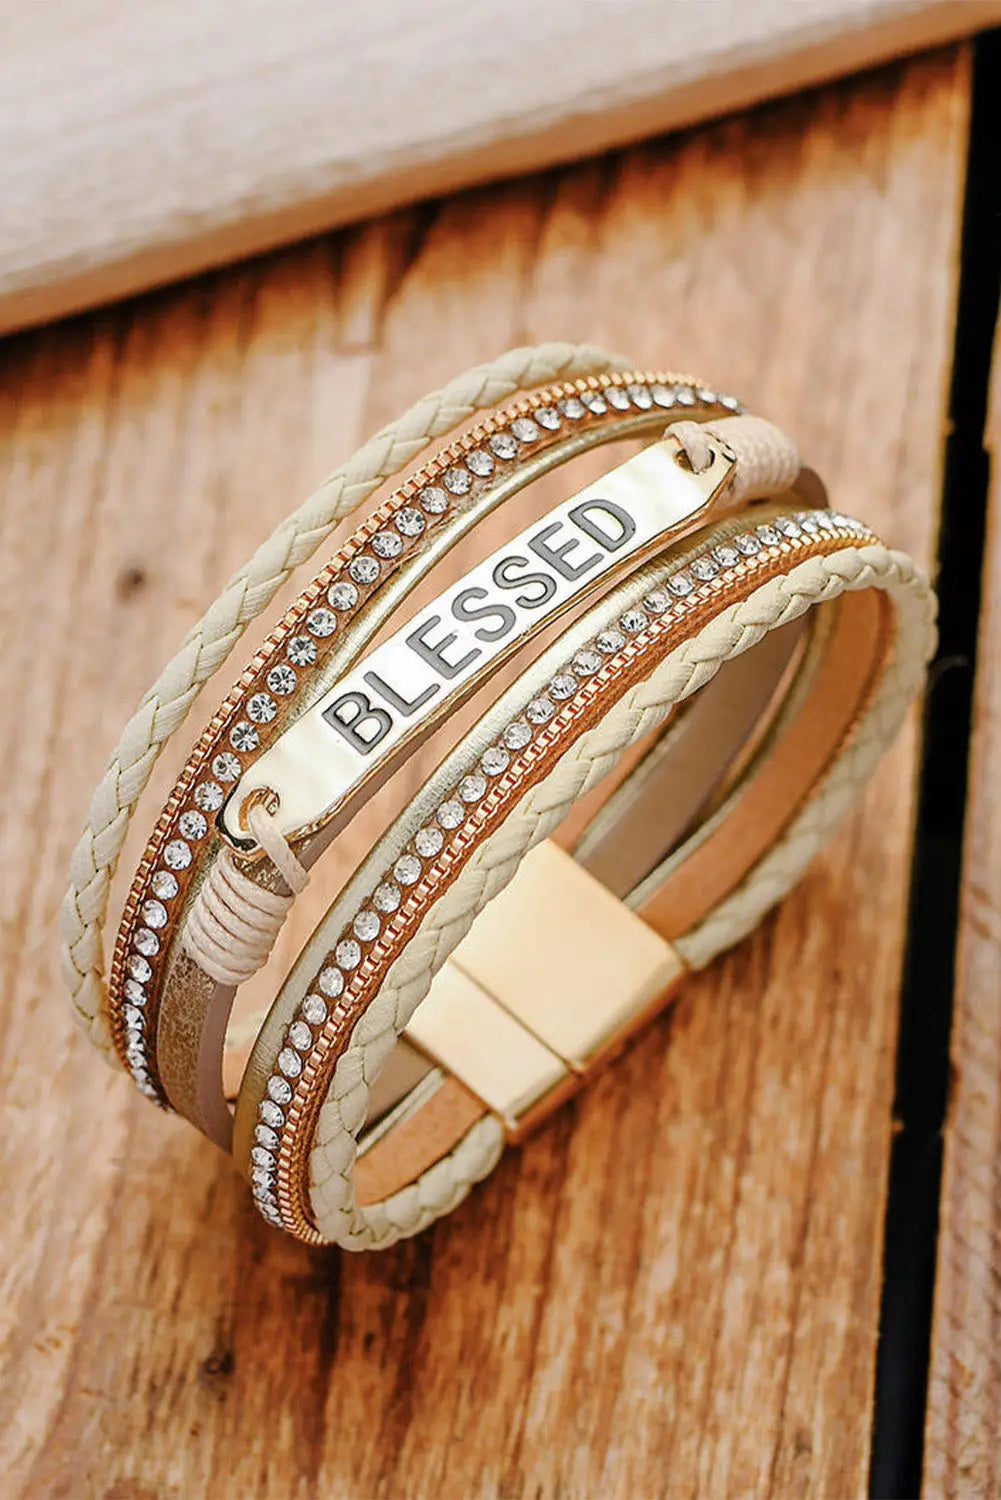 Beige blessed rhinestone braided detail buckle bracelet - one size bracelets